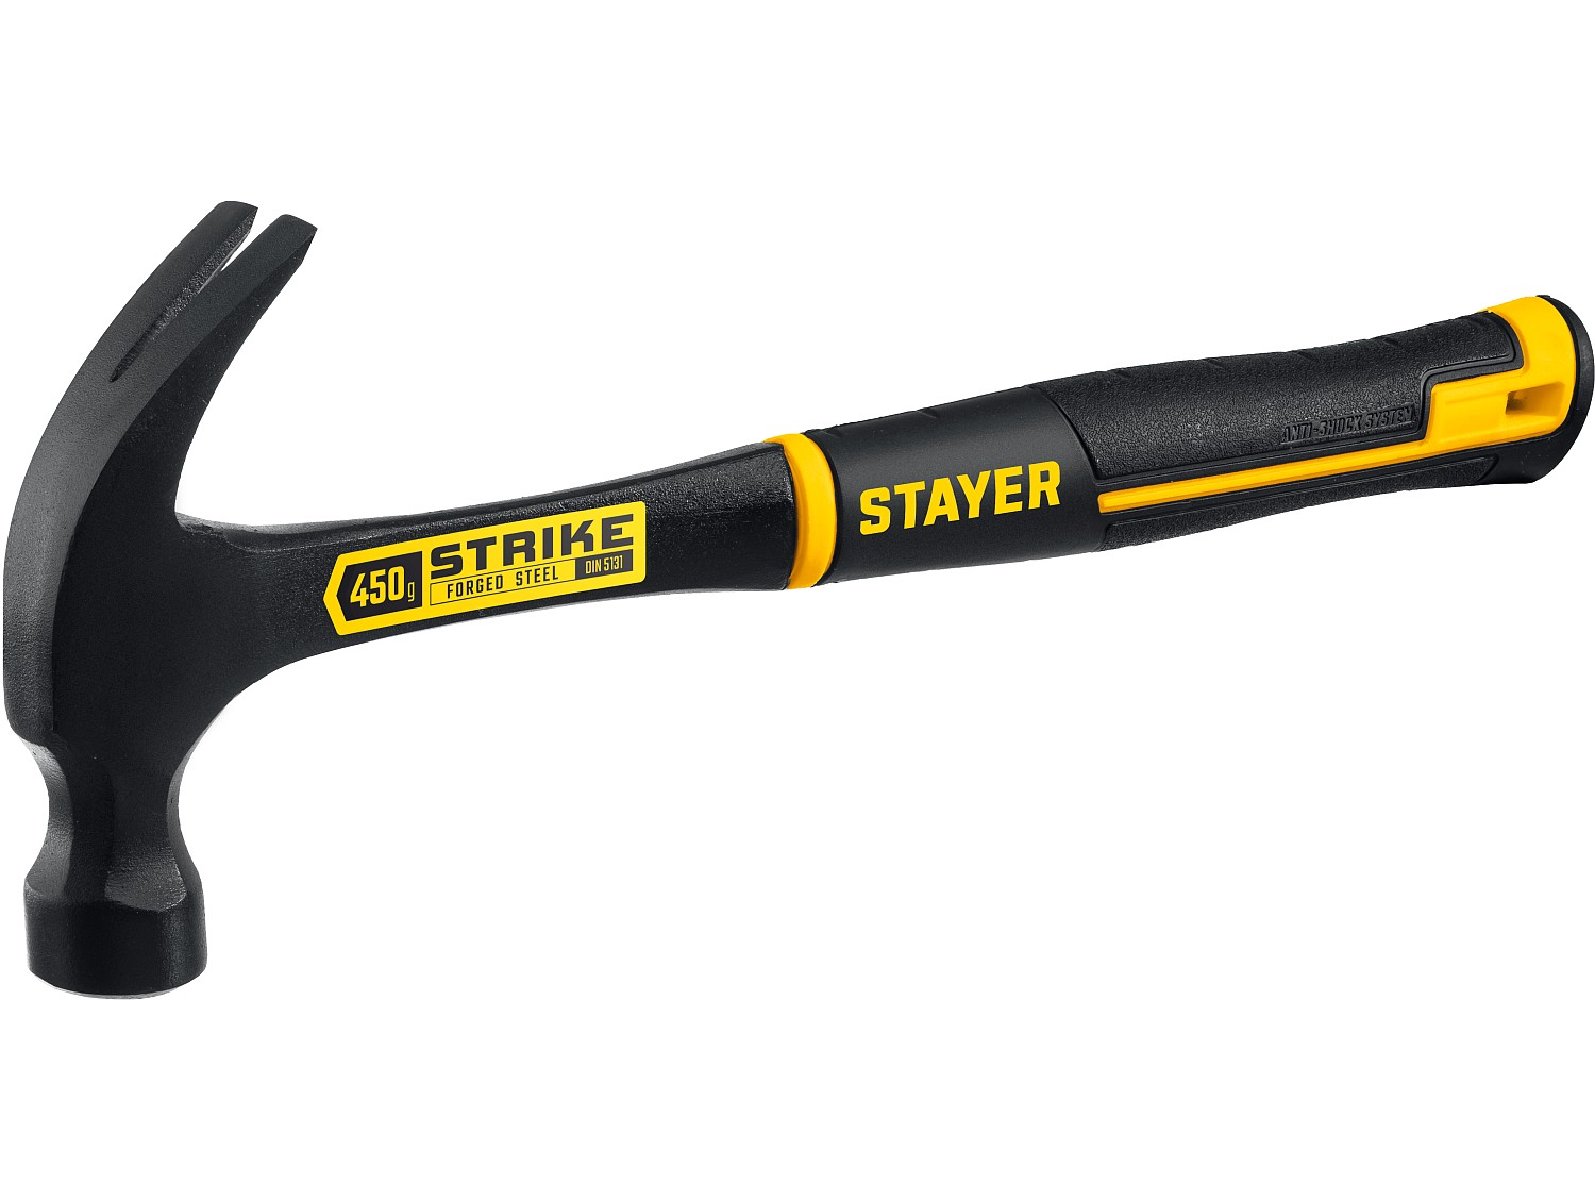   - STAYER Strike 450  (2025-450)